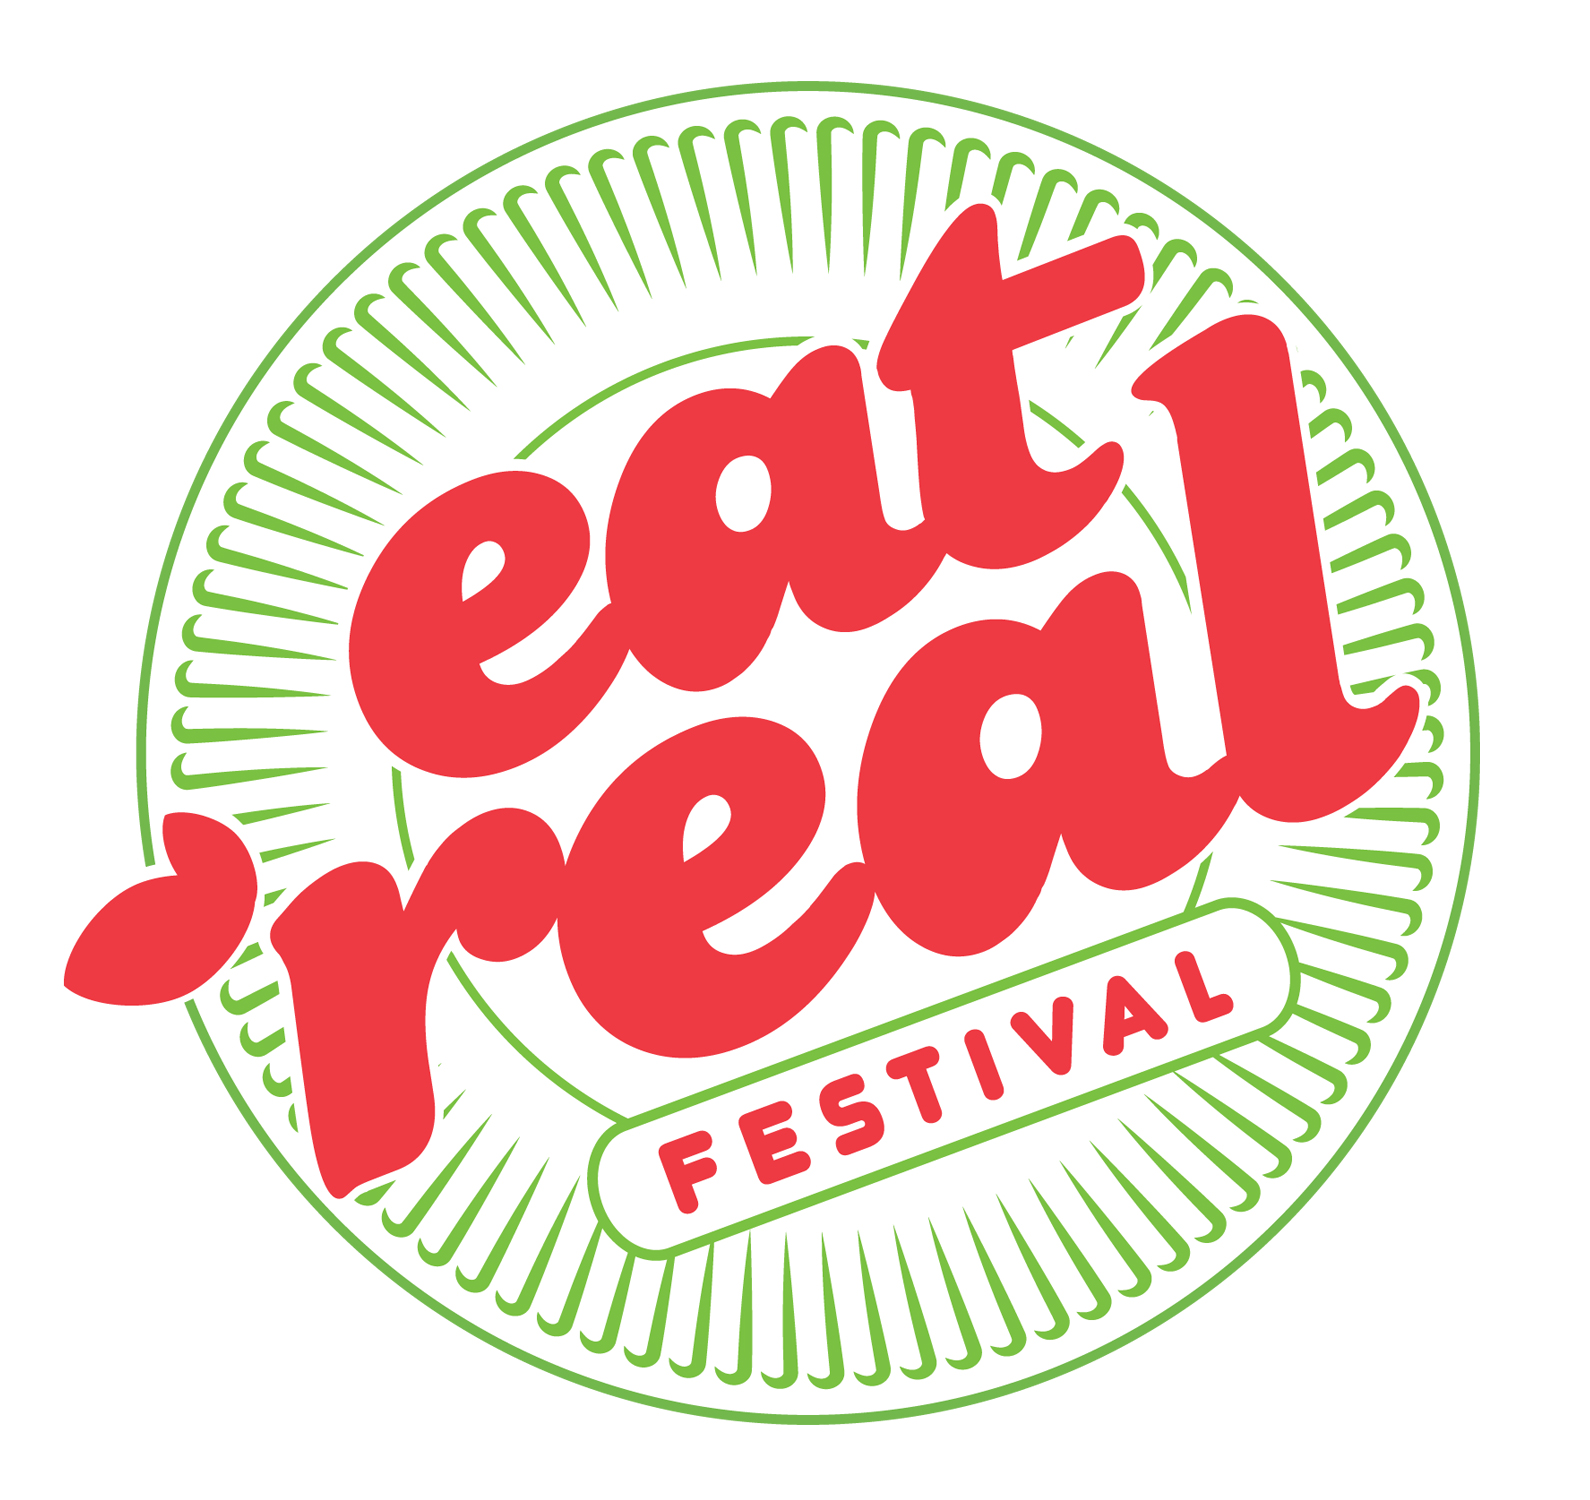 Eat Real Festival Food Oakland Jack London Square Seafood.jpg